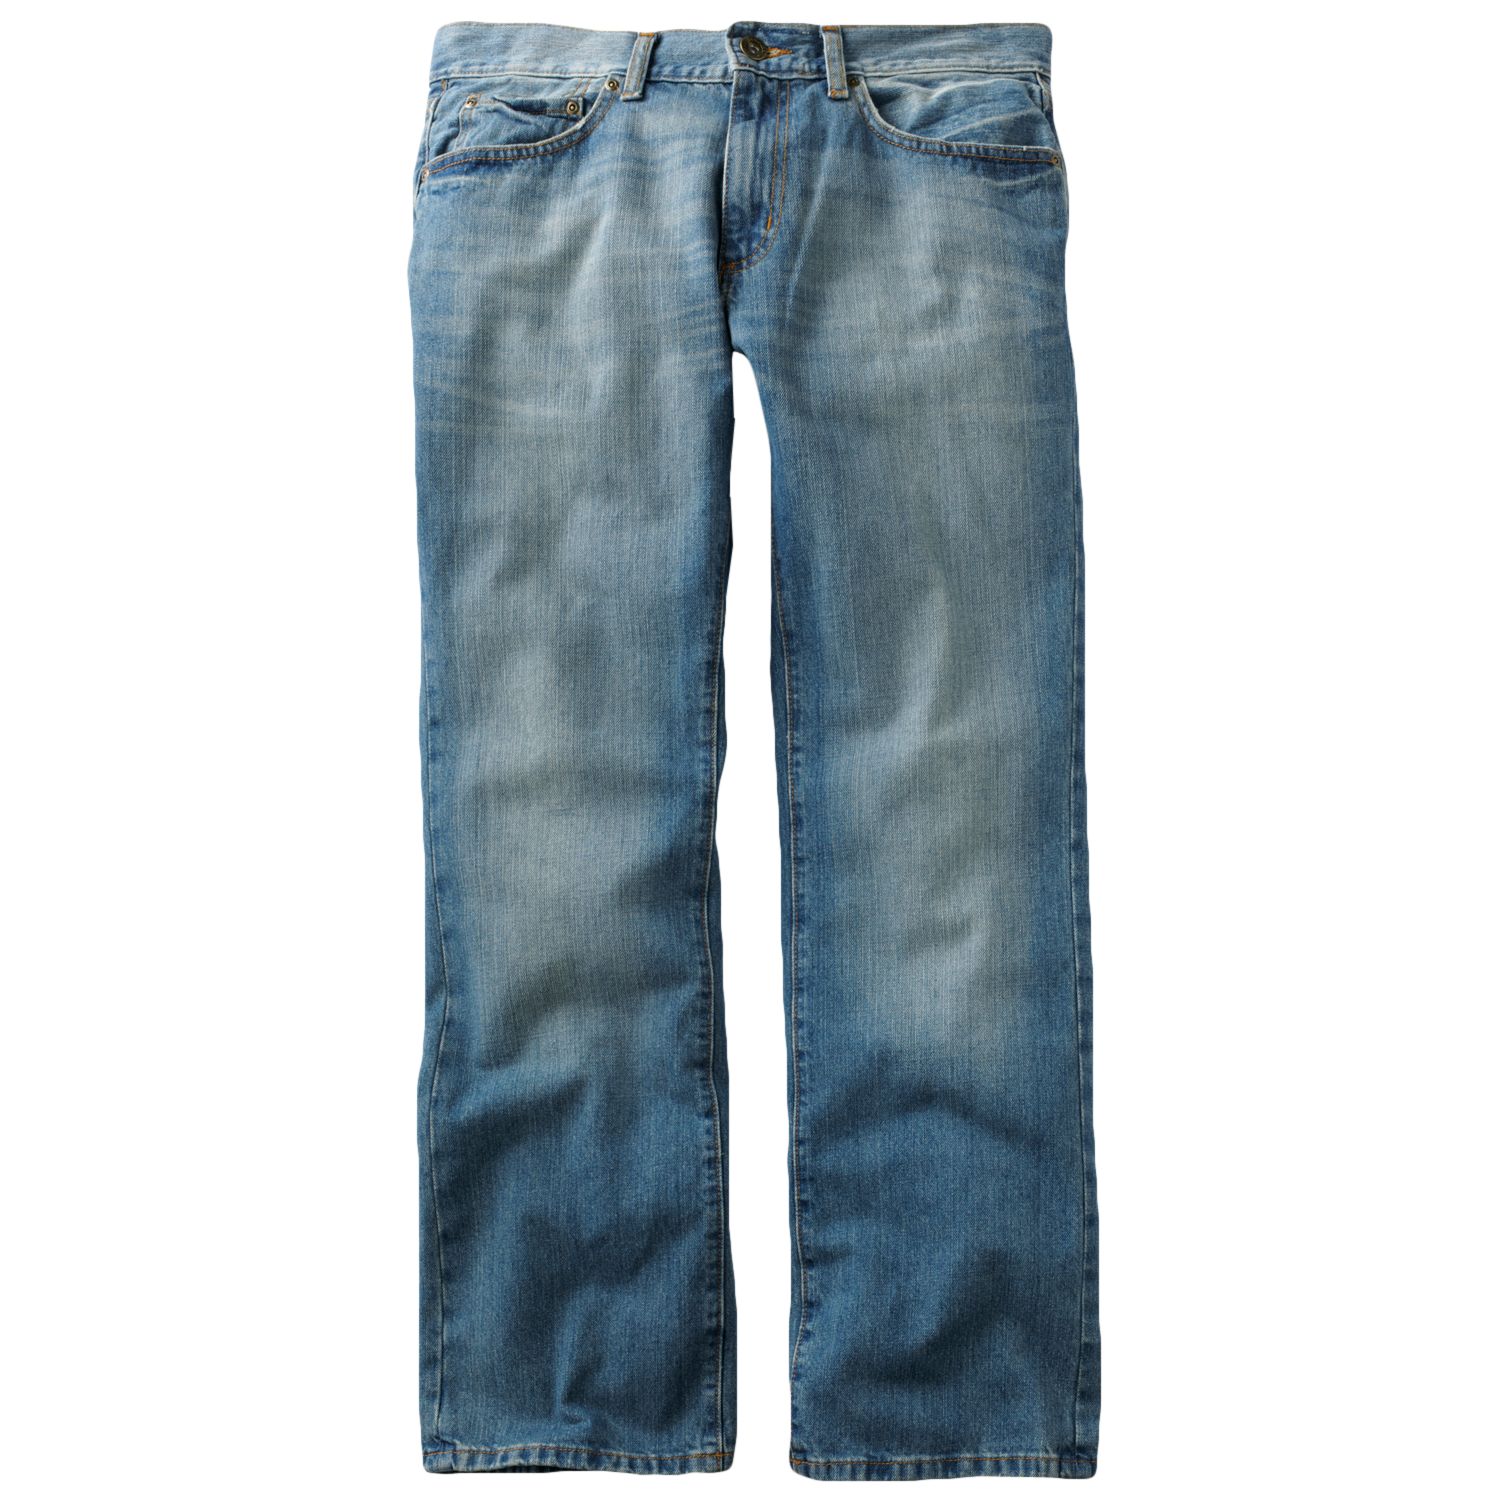 urban star jeans kohls